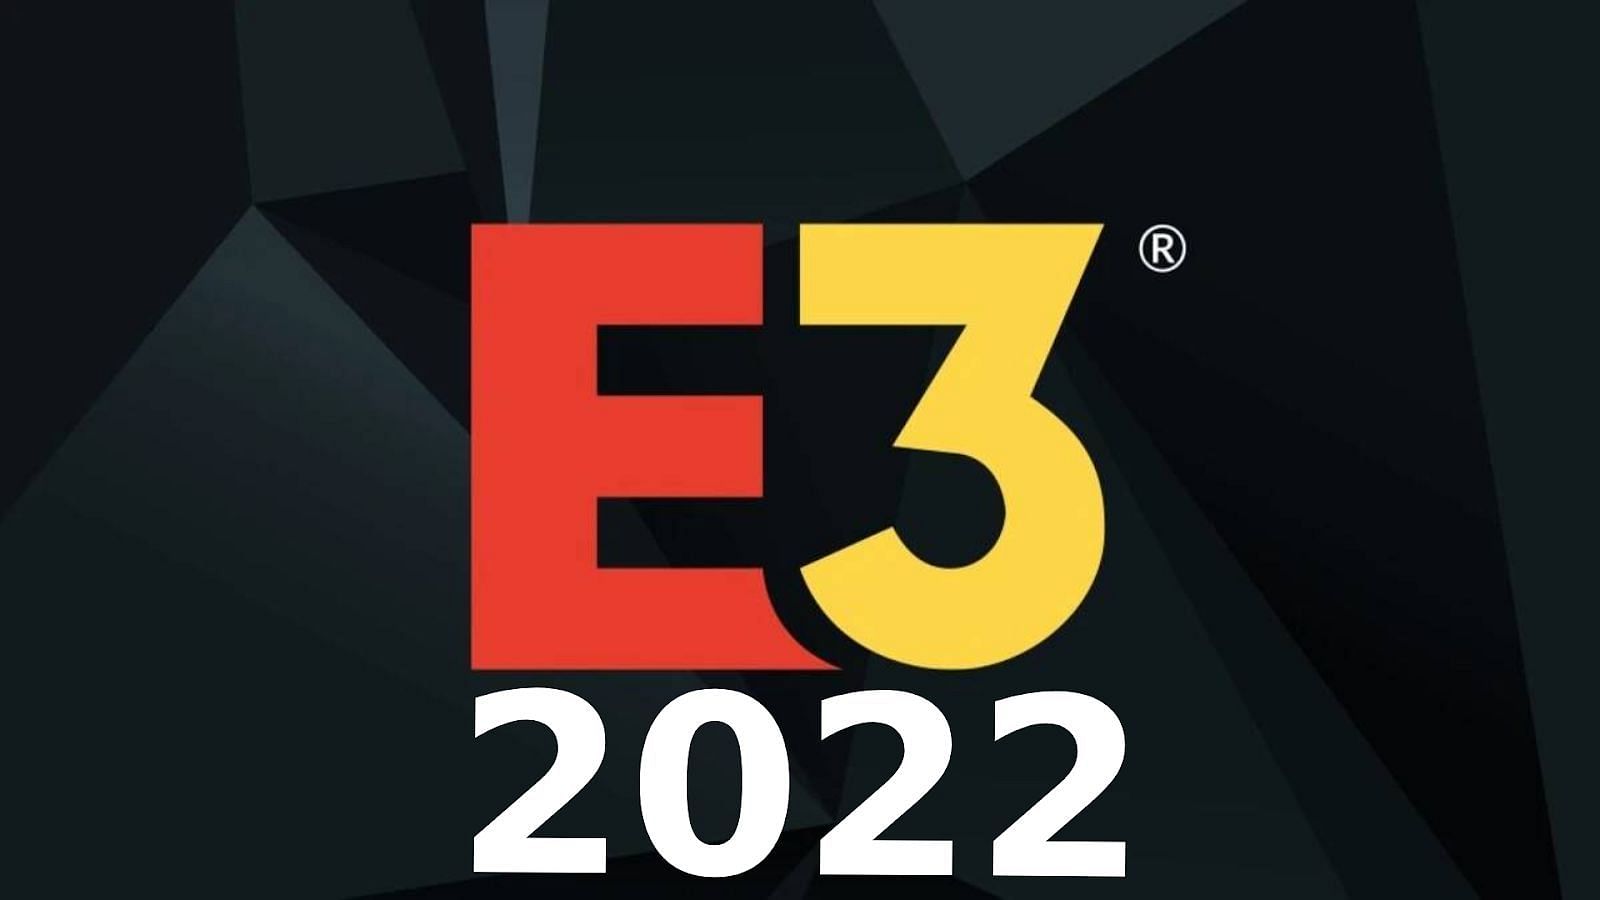 E3 2022 possibly canceled (image by E3)